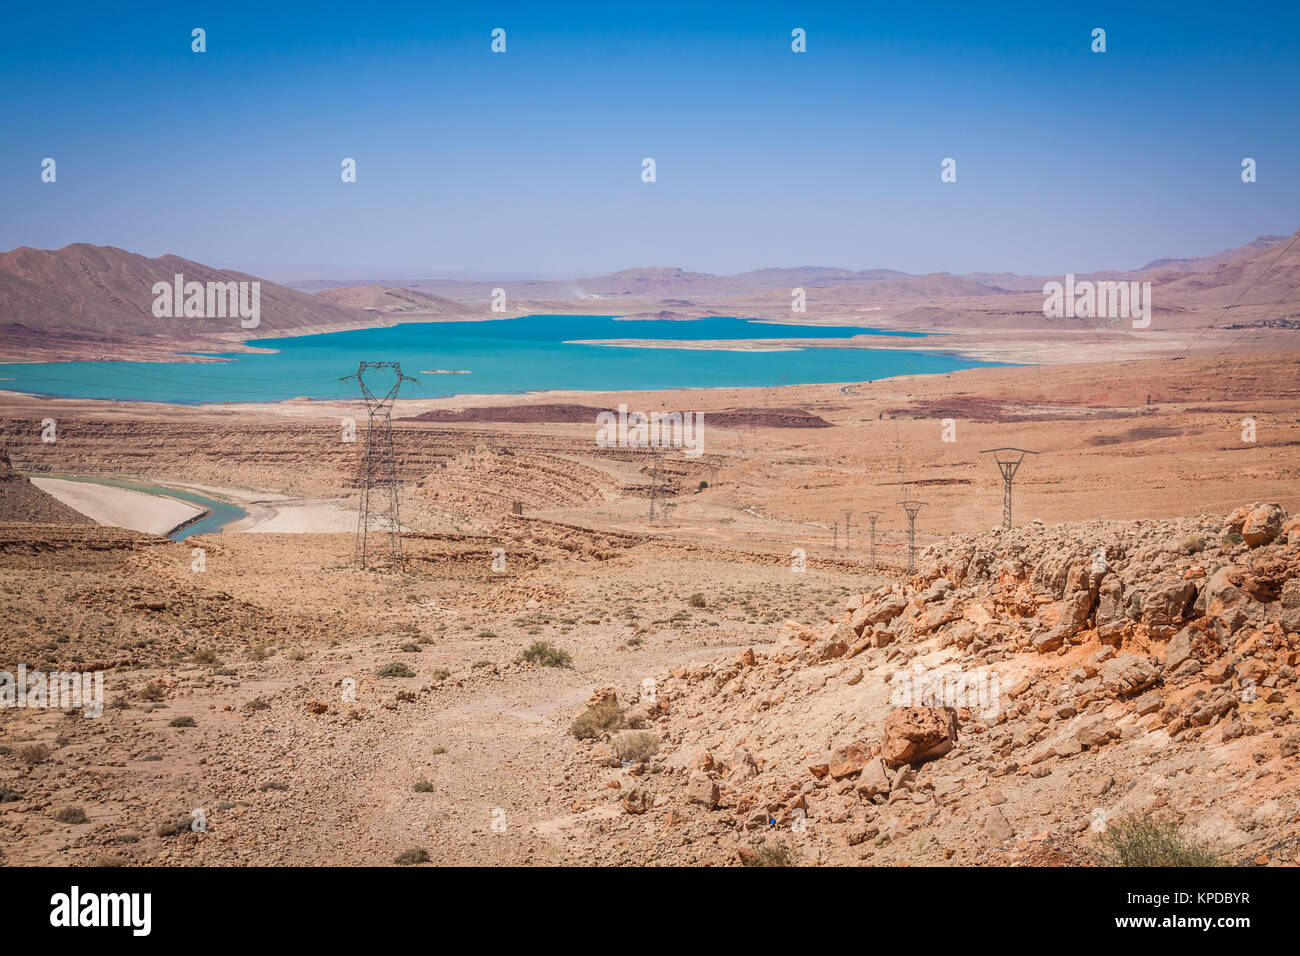 lake al-hassan addakhil in errachidia morocco Stock Photo